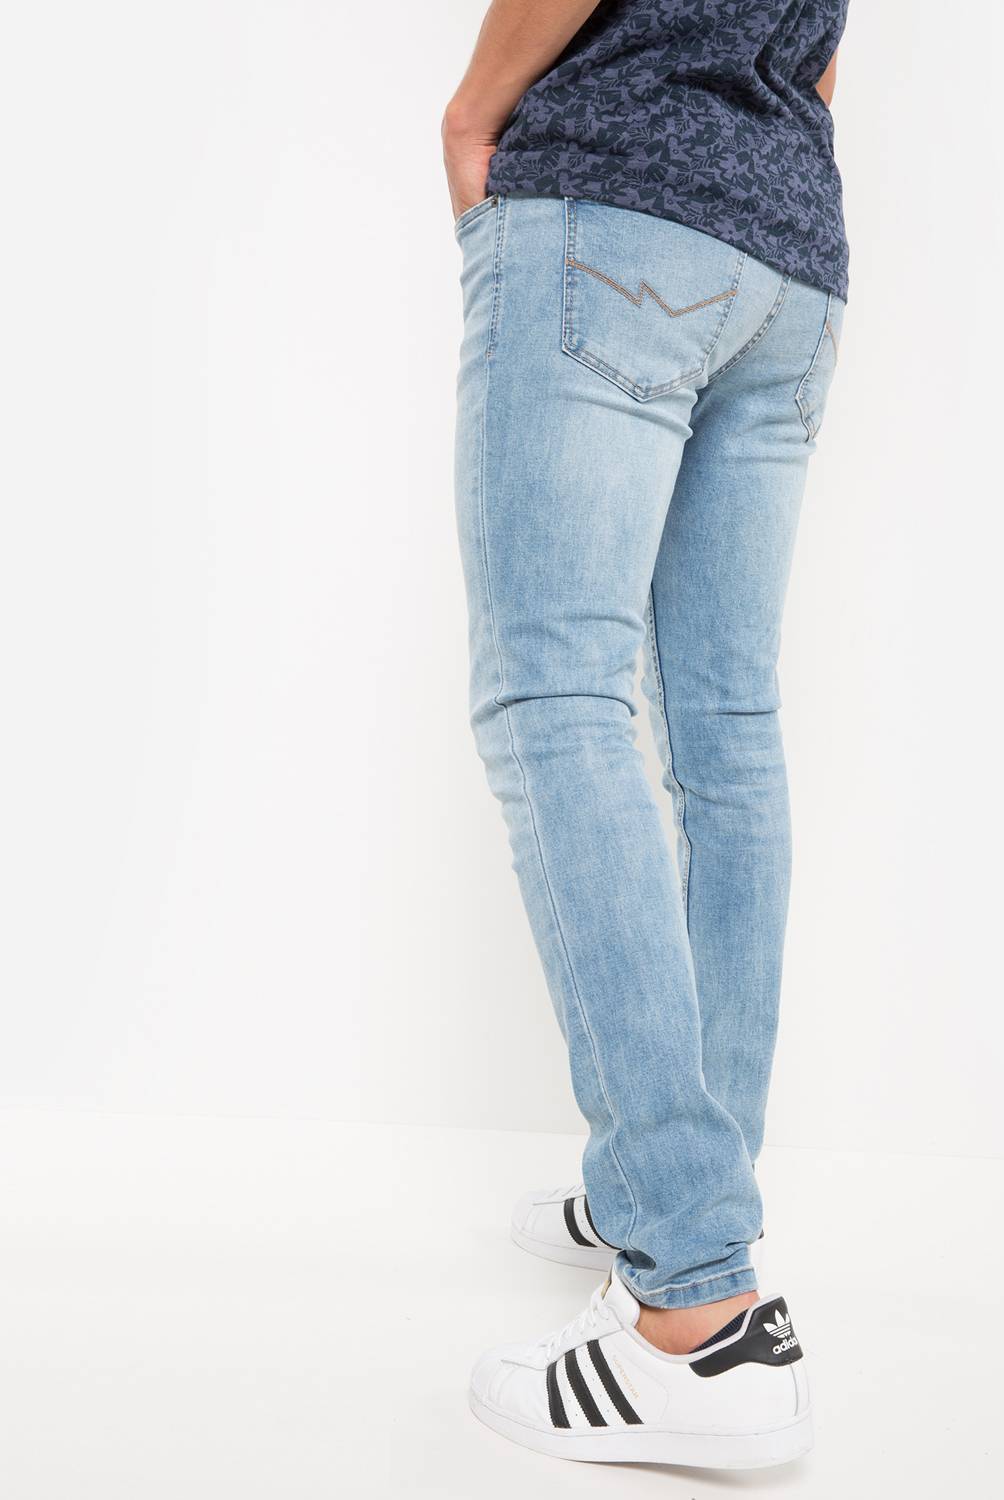 AMERICANINO - Americanino Jeans Super Skinny Fit Hombre